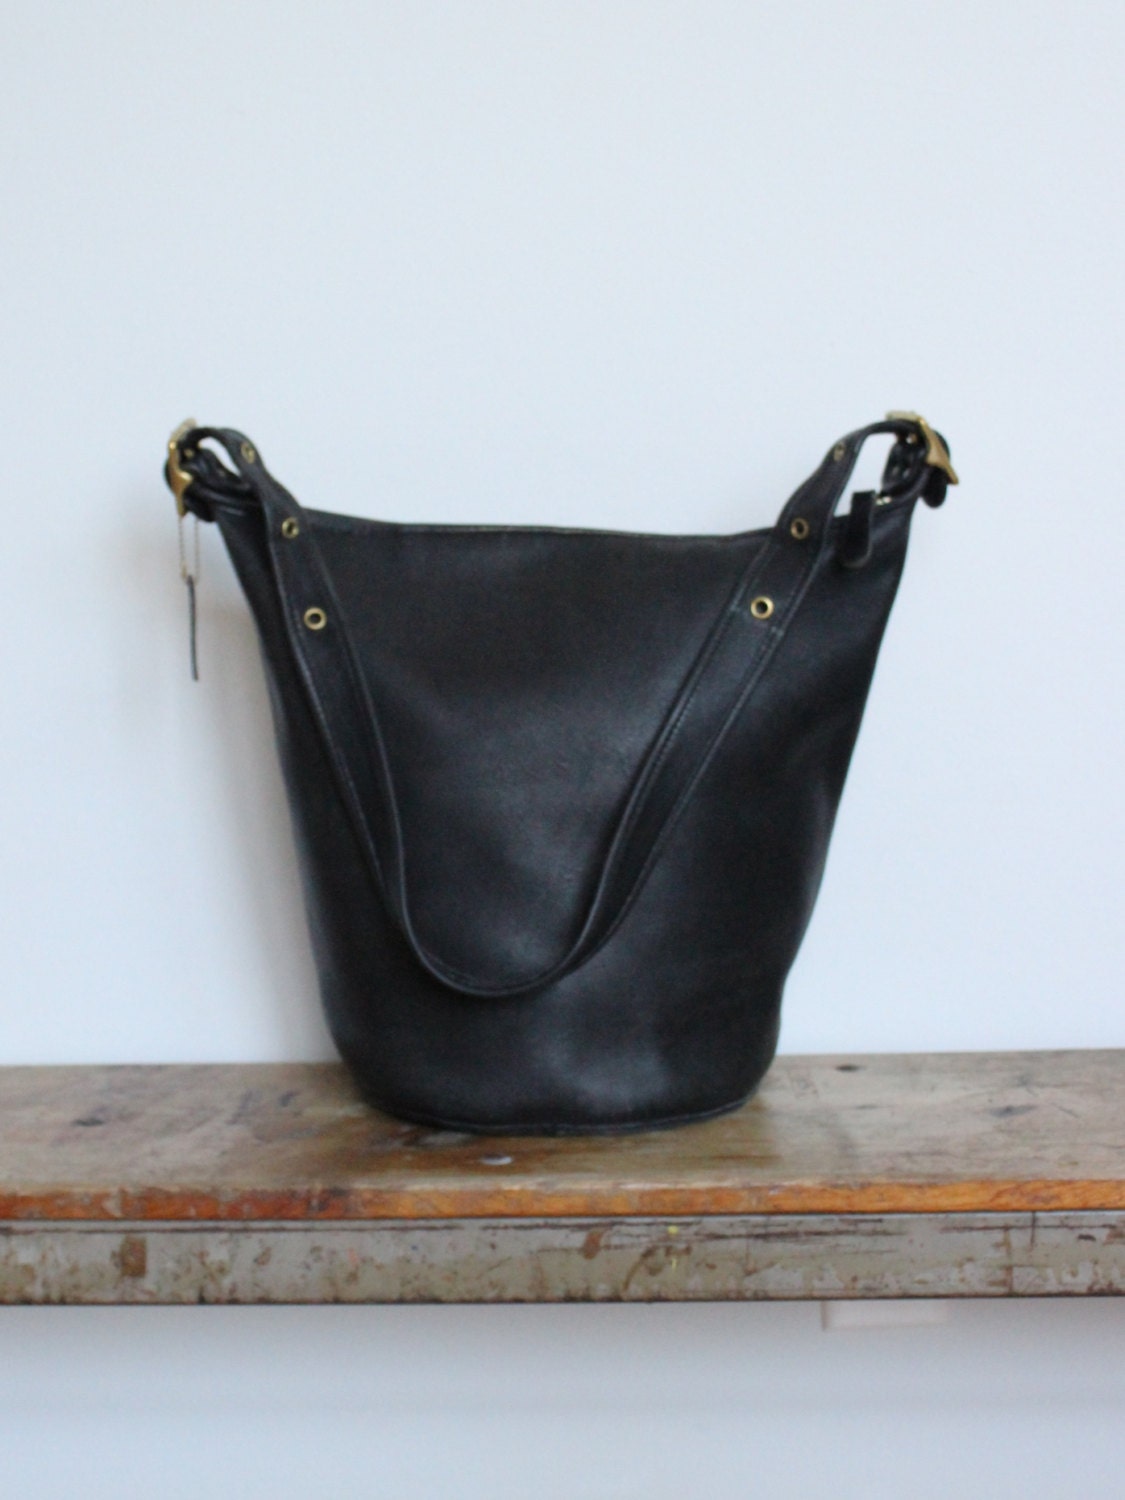 SALE Vintage Coach Duffle Bag in Black 9085// XL Leather